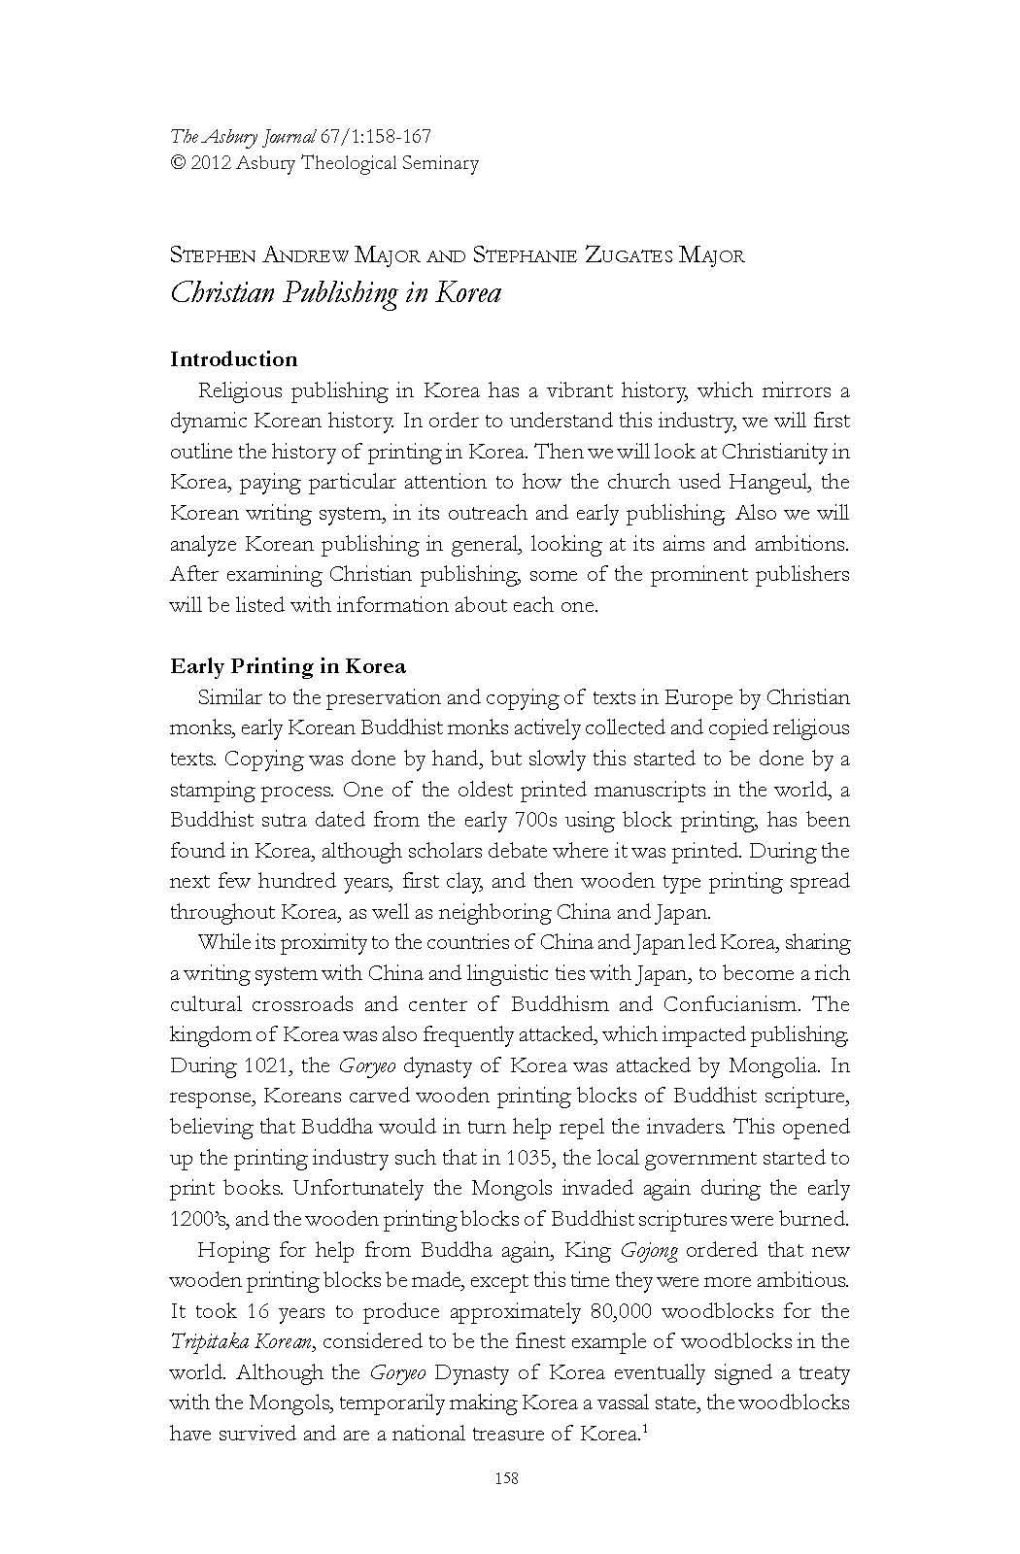 Christian Publishing in Korea